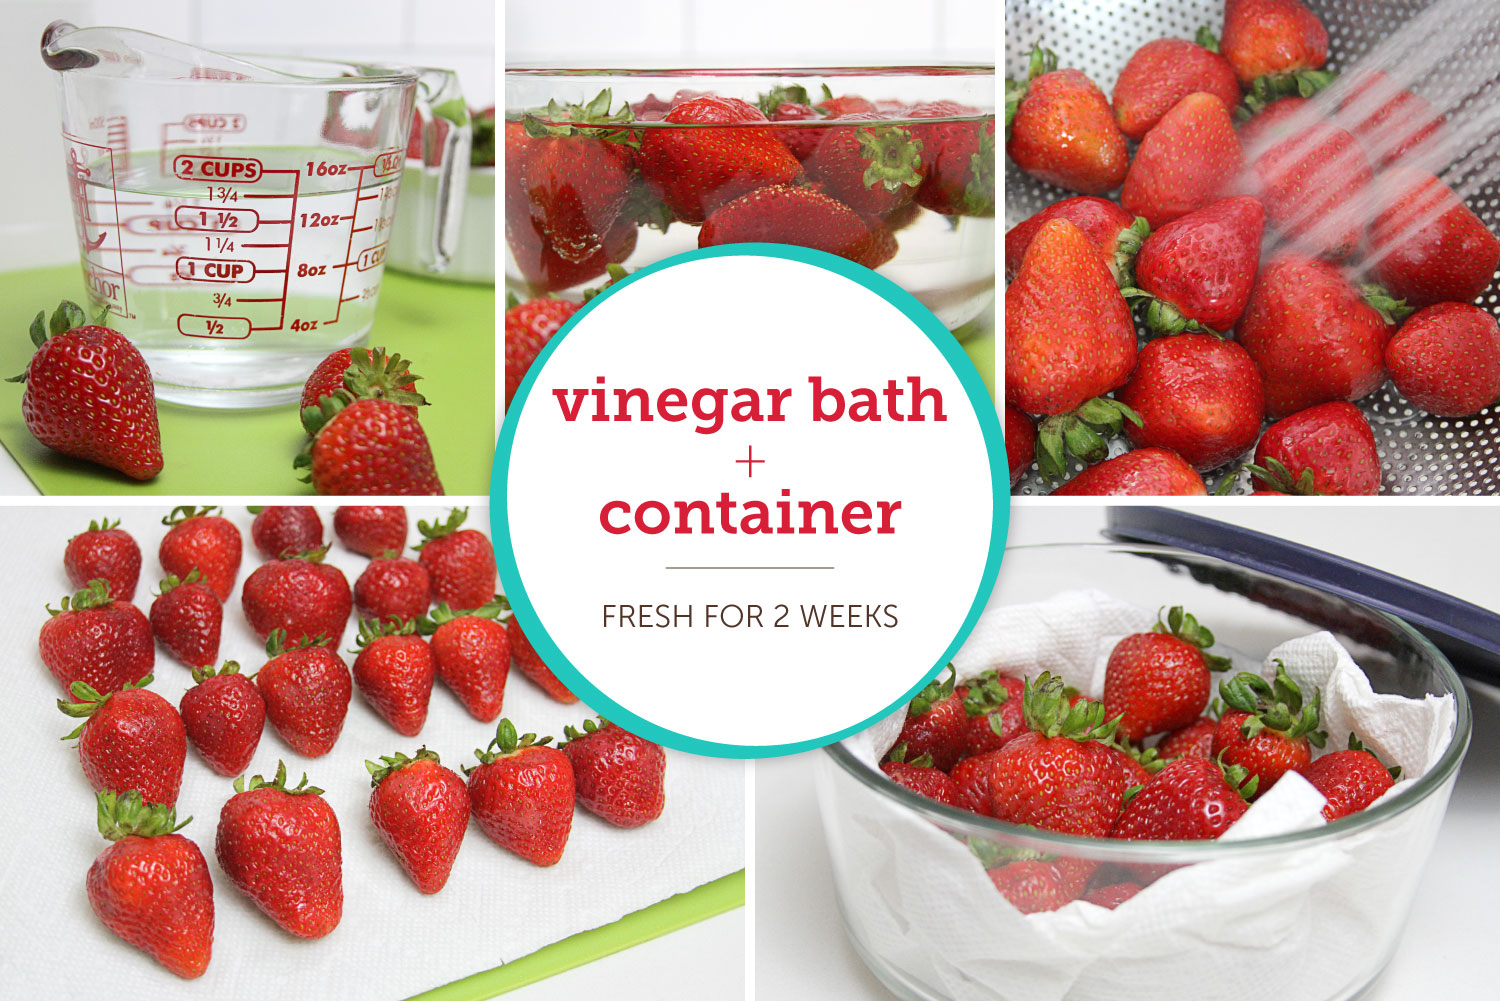 https://www.berries.com/blog/wp-content/uploads/2016/08/Strawberry-storage-vinegar-V4.jpg